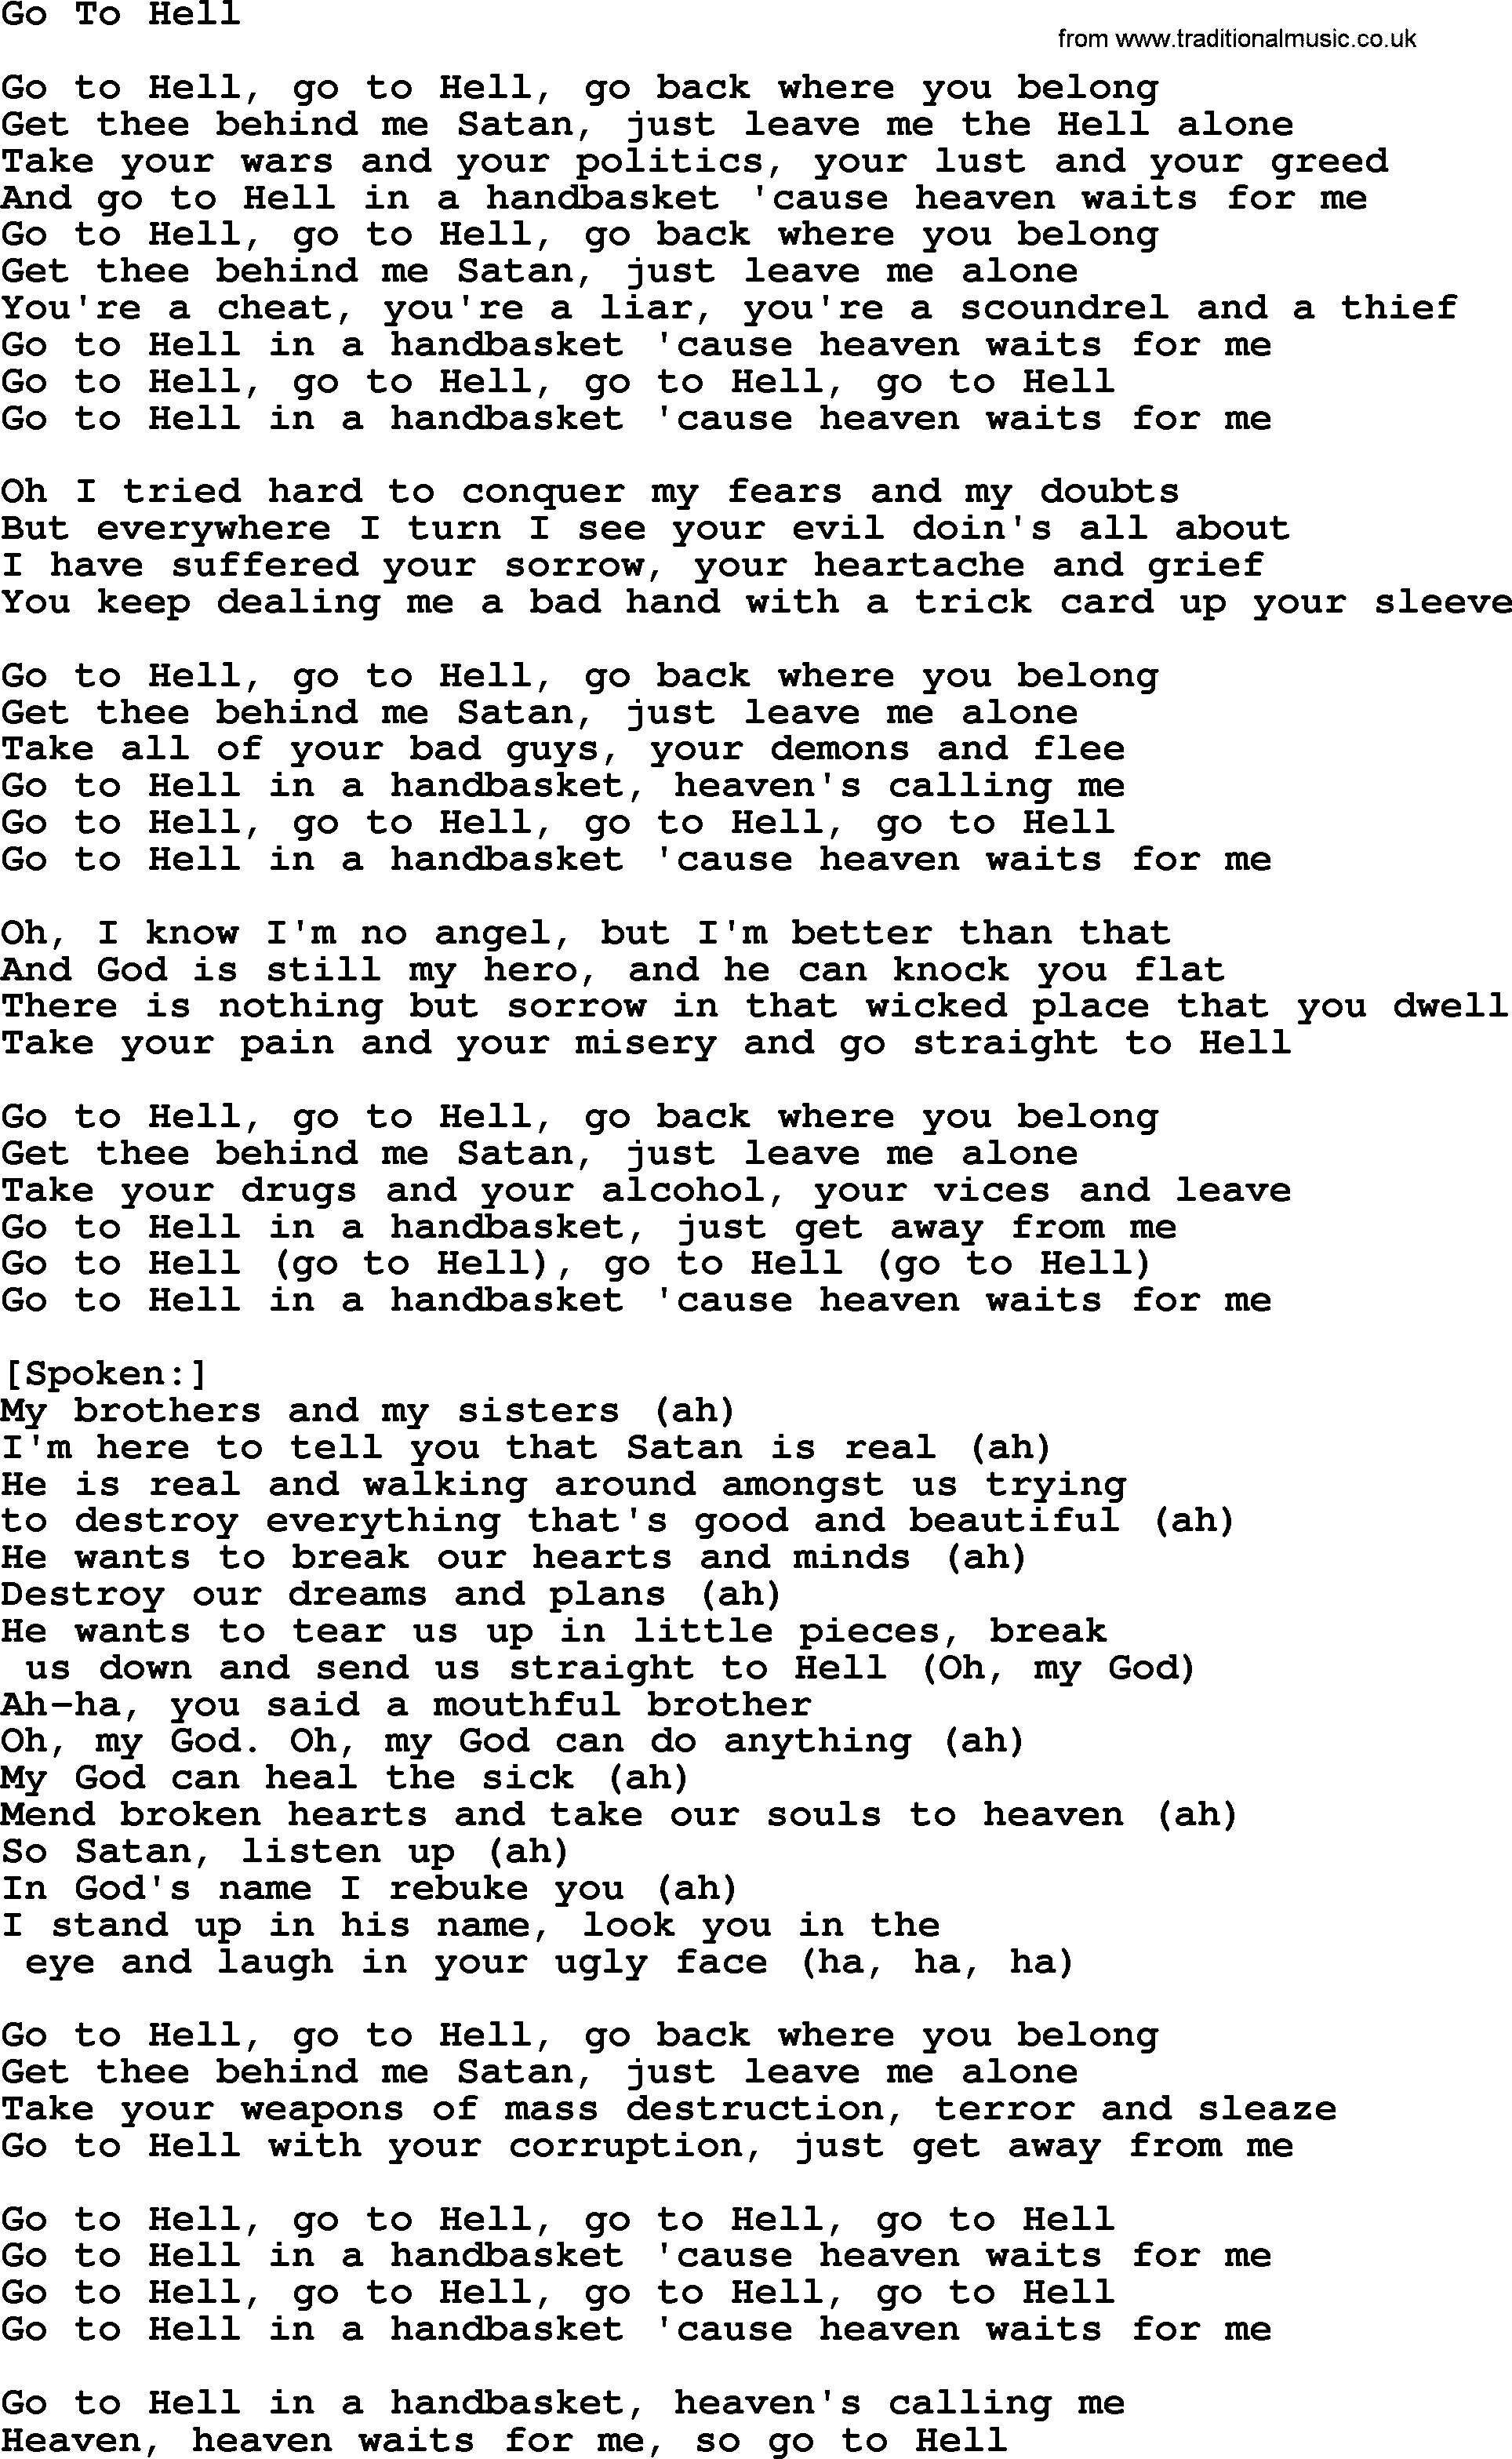 Dolly Parton song Go To Hell.txt lyrics